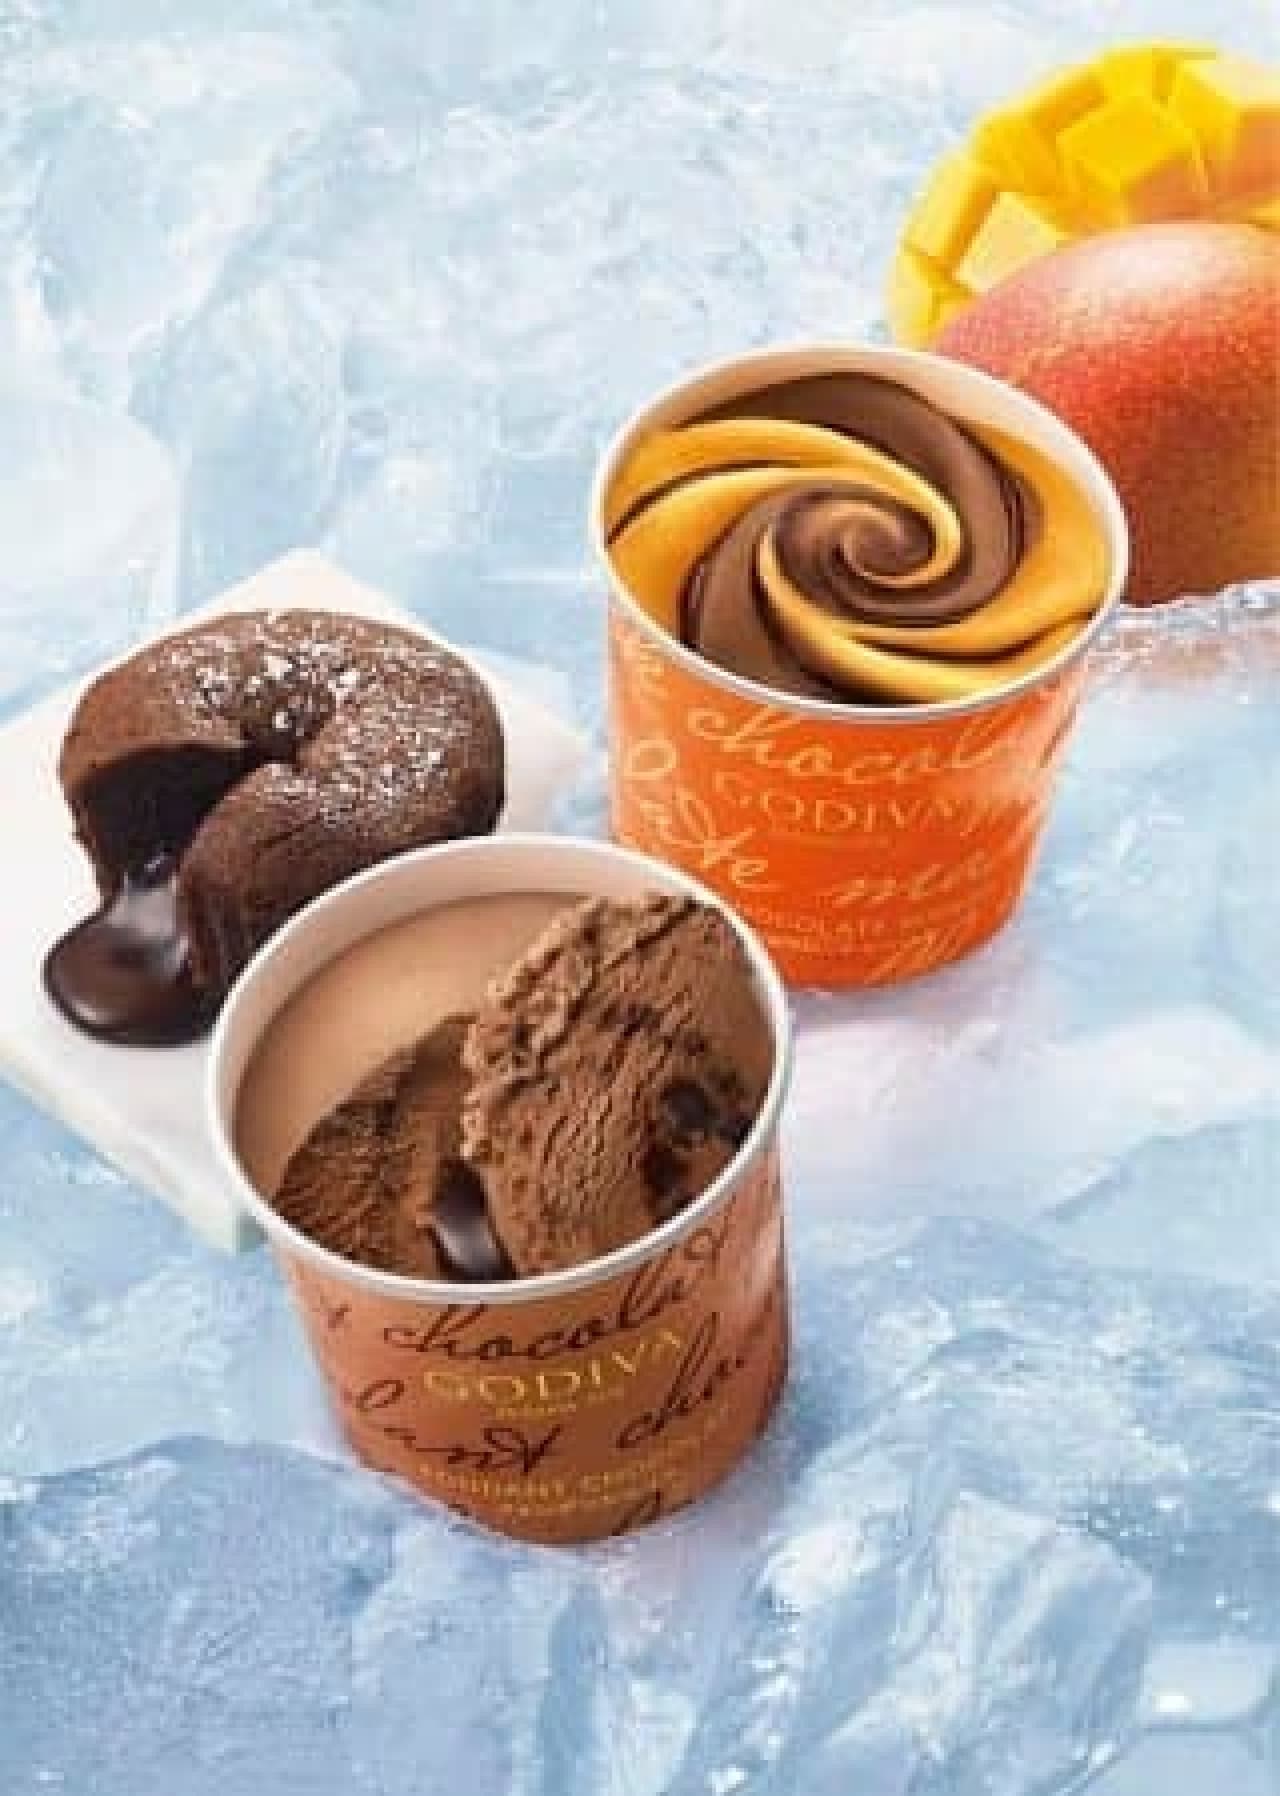 Godiva's cup ice cream "Fondant Chocolat" "Milk Chocolate Mango"